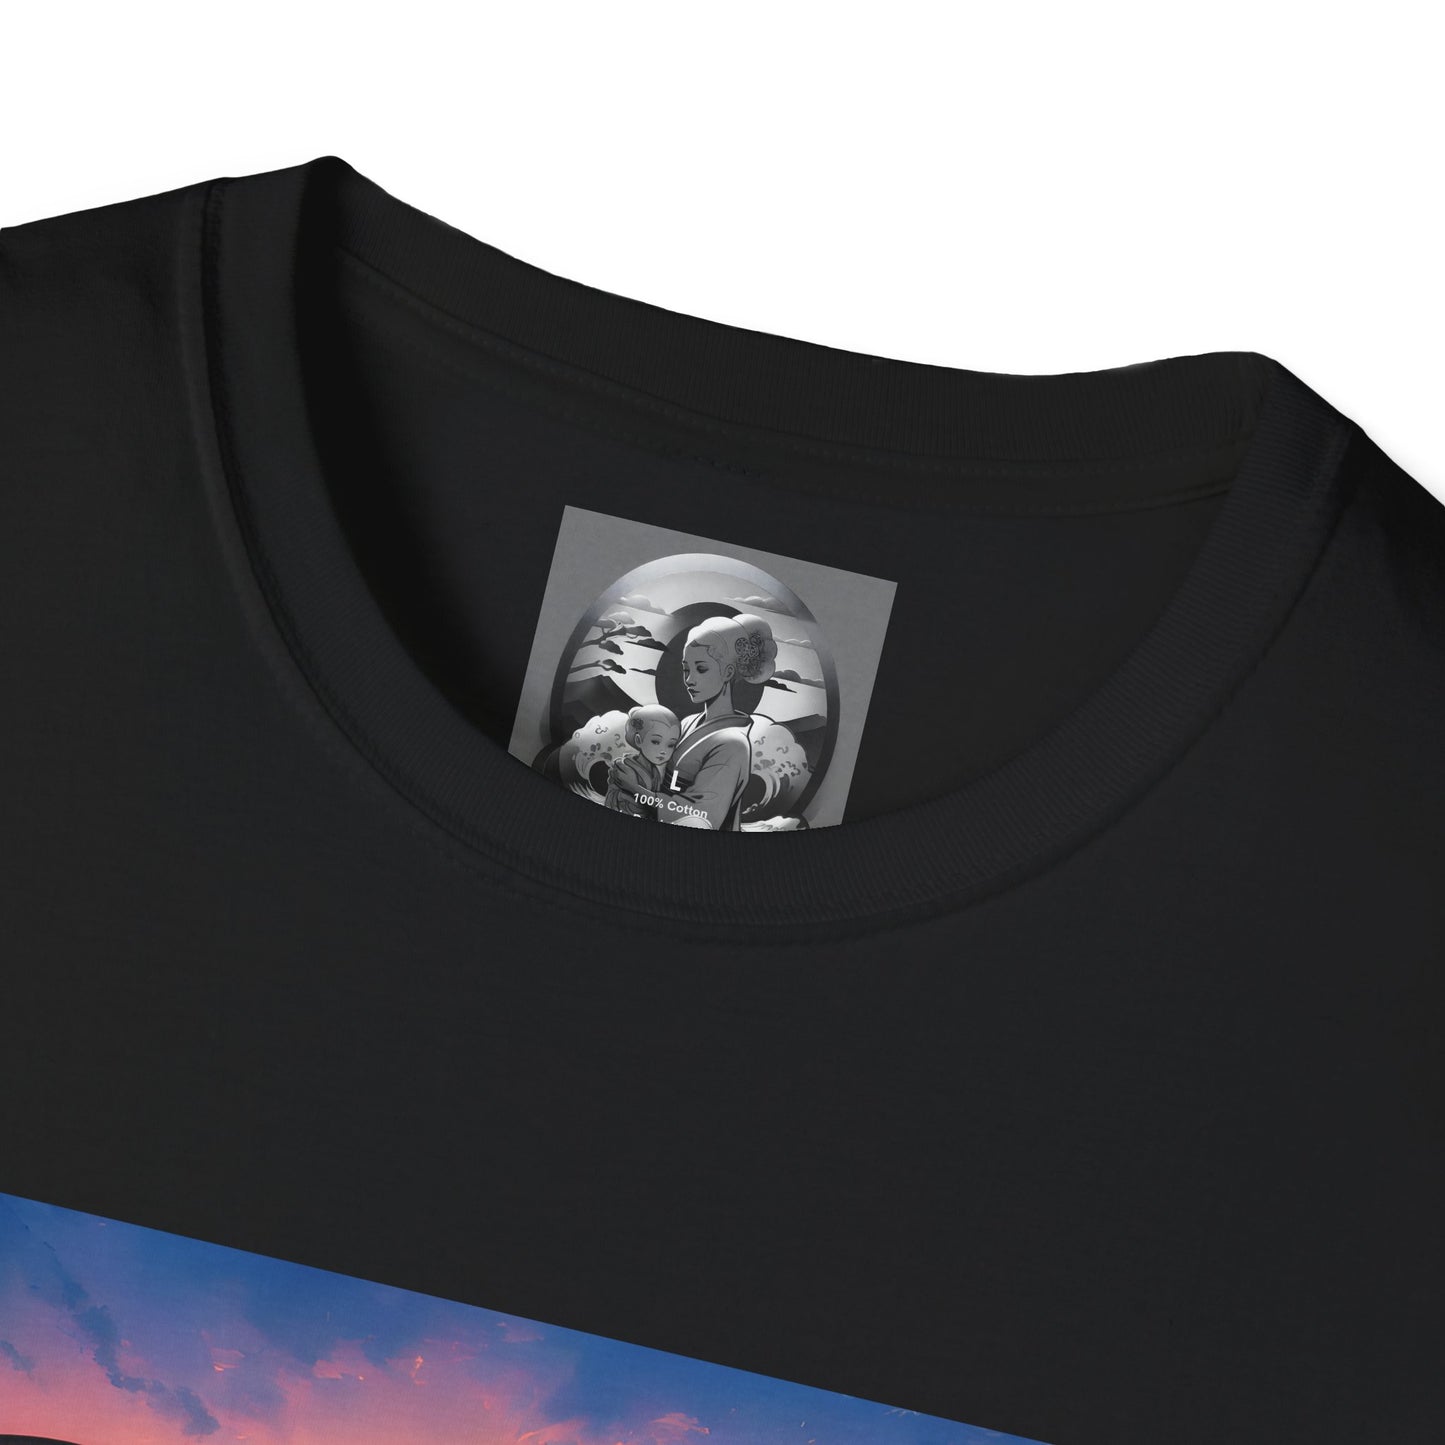 " The Dark Knight watching" Single Print Unisex Softstyle T-Shirt